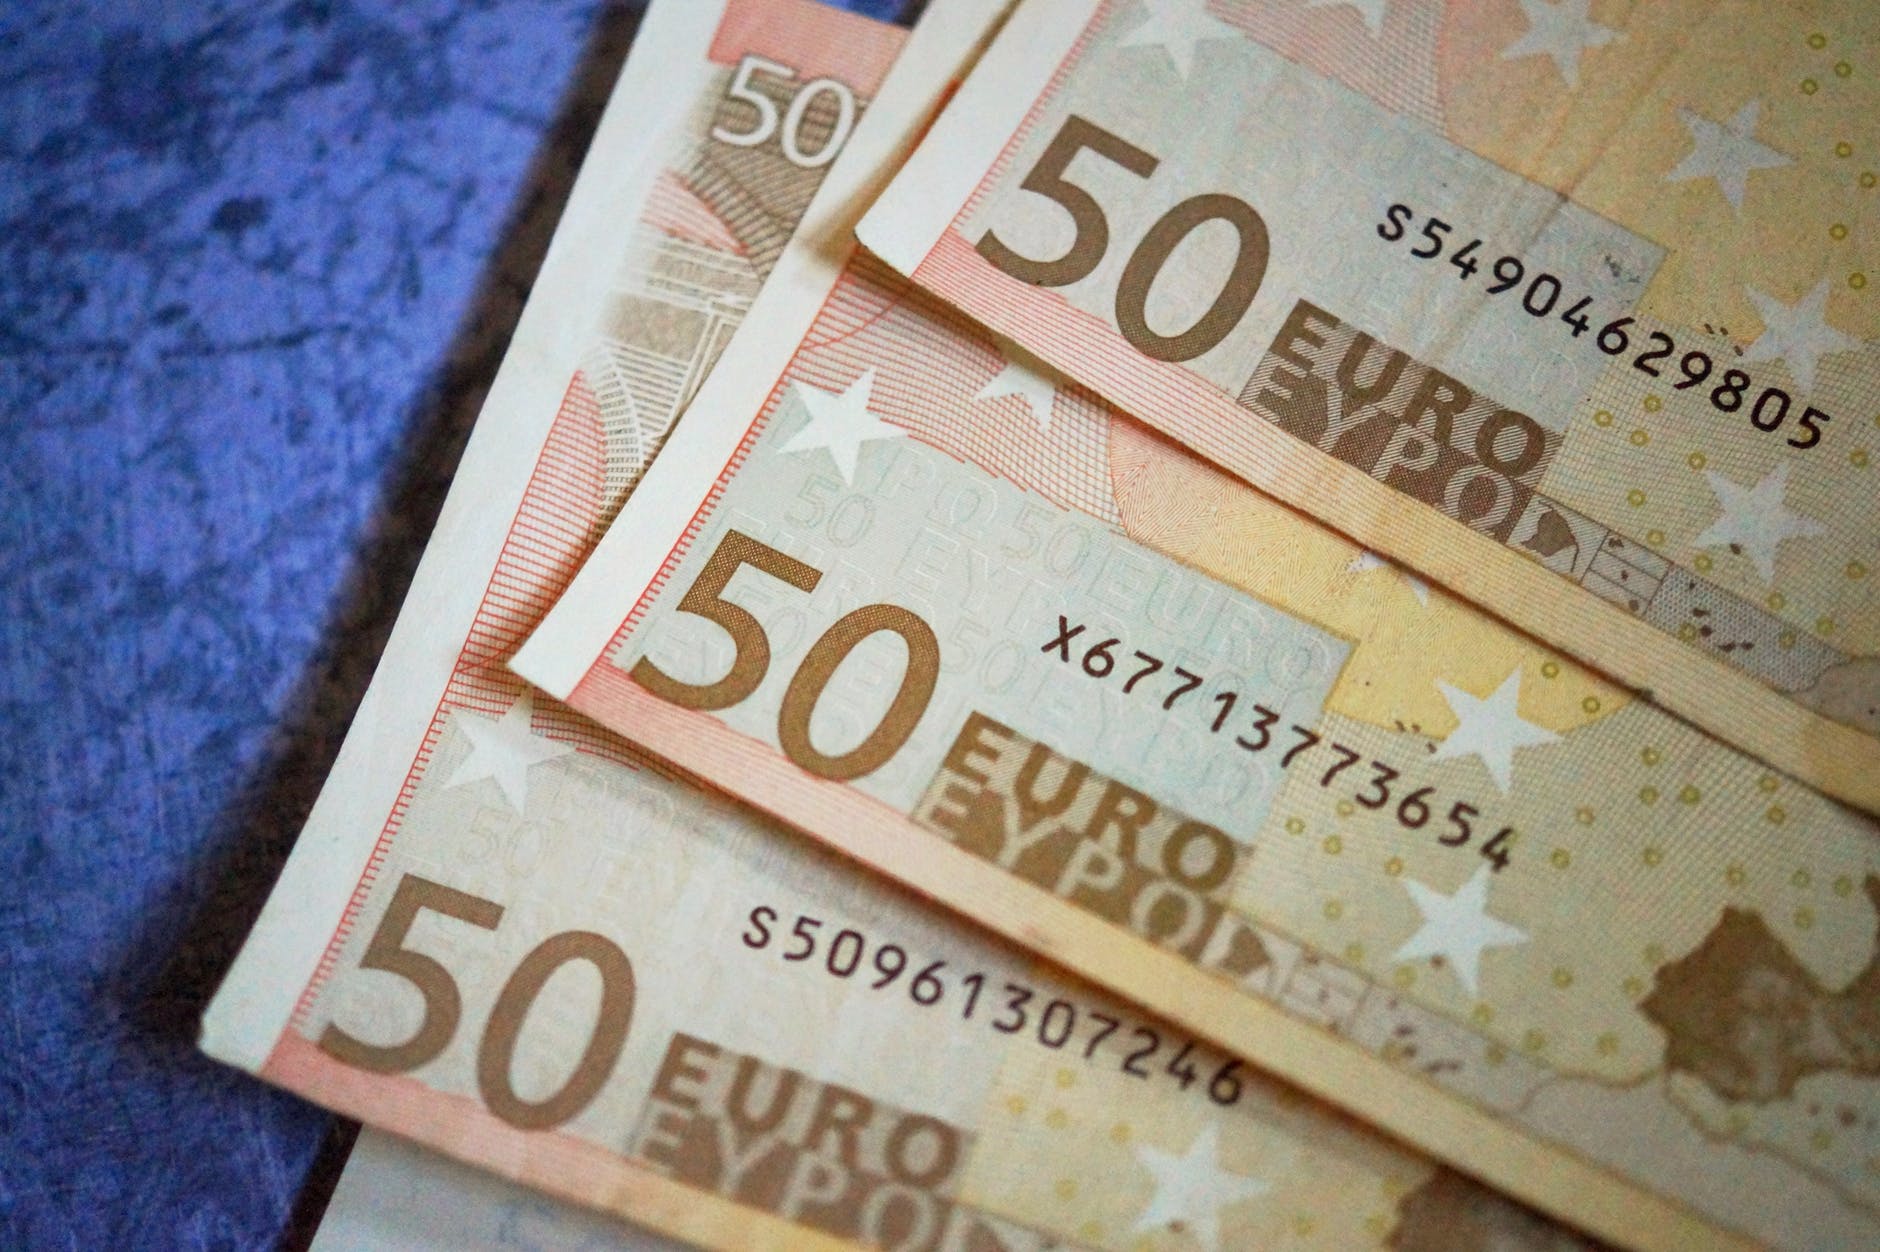 MEGA CIRCOLARE INPS SUL BONUS 200 EURO